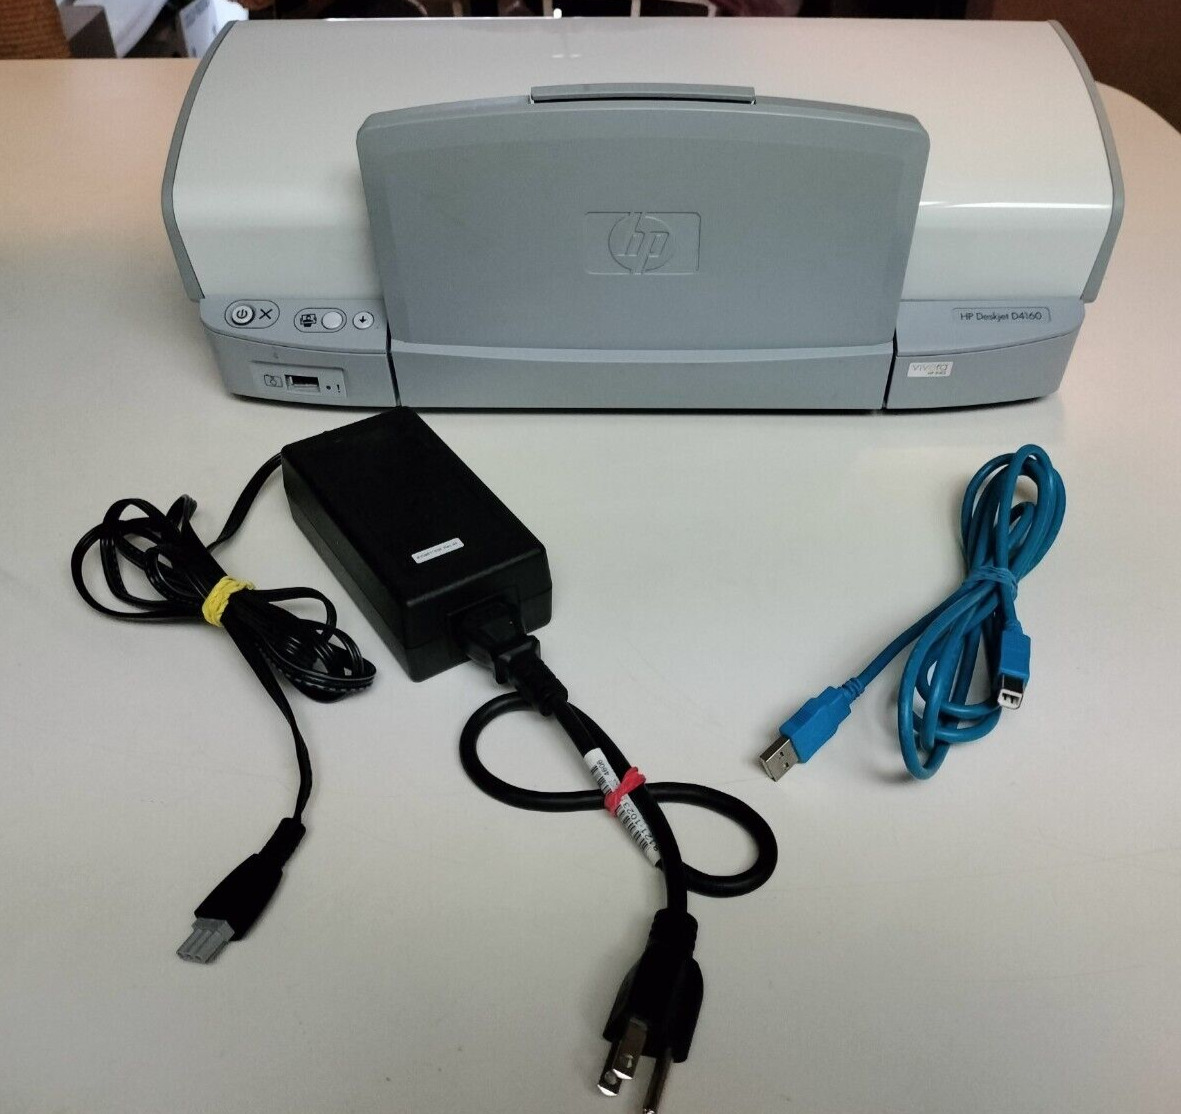 HP Deskjet D4160 Inkjet Printer w/Power Cord & USB Cable, See Description.